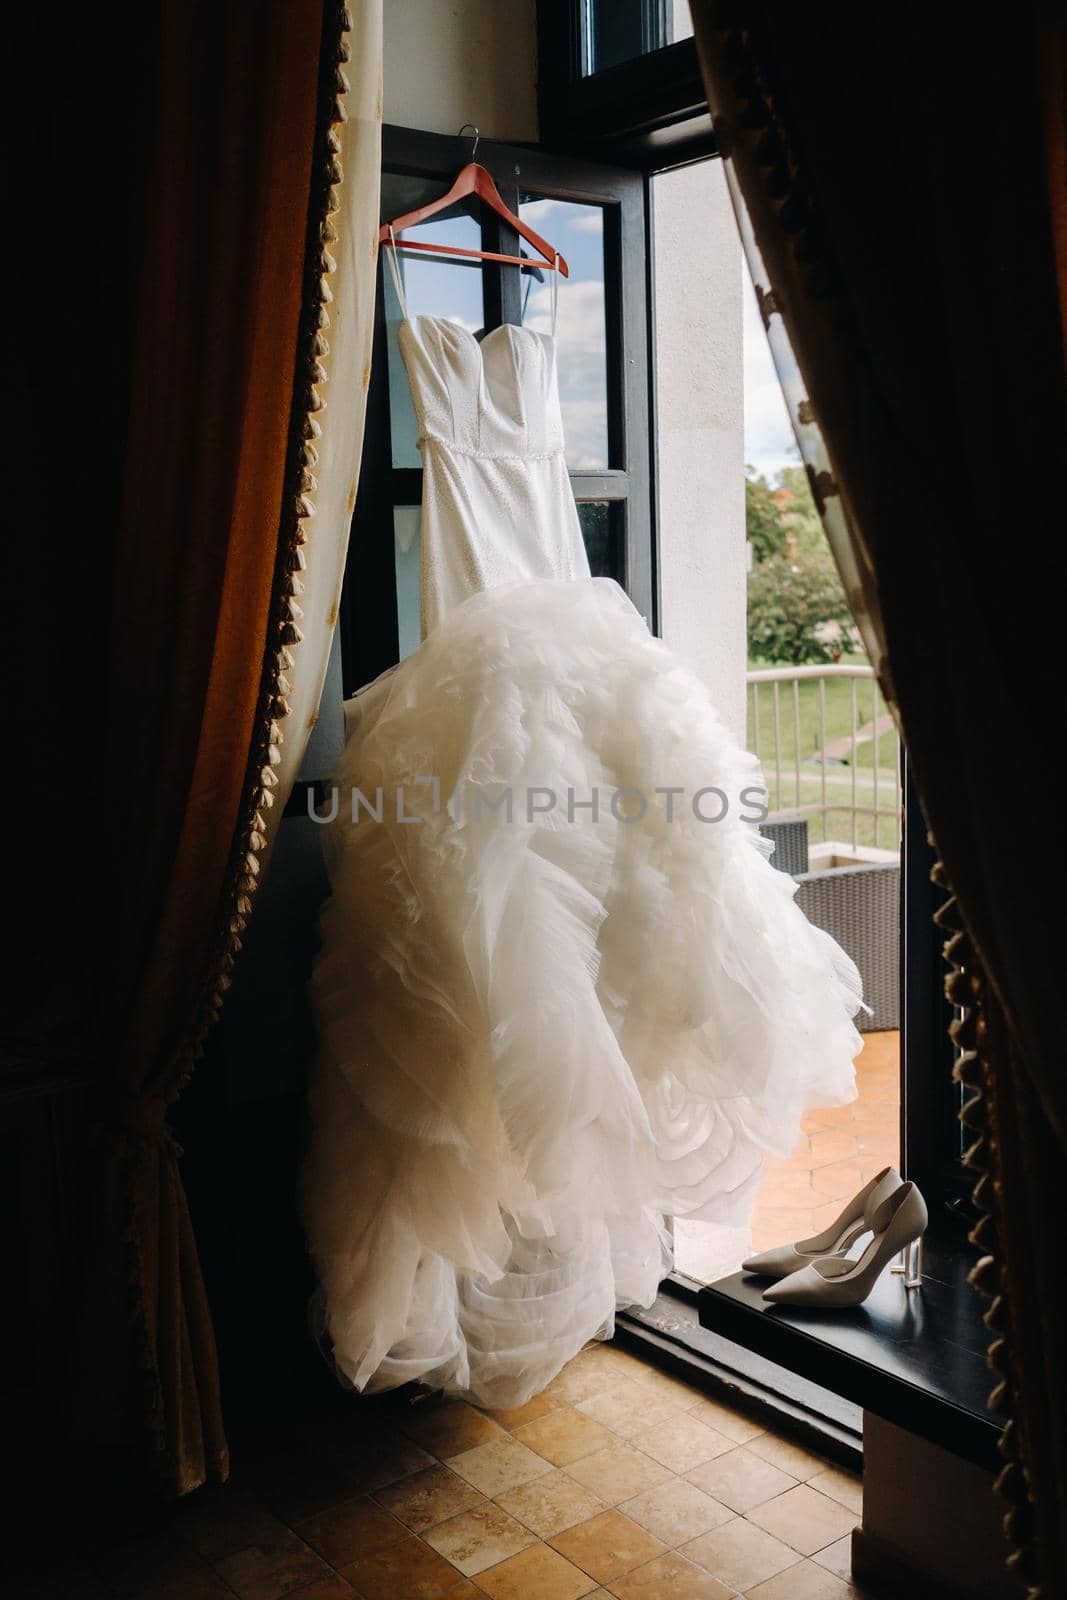 a white wedding dress hangs on a hanger near the window by Lobachad